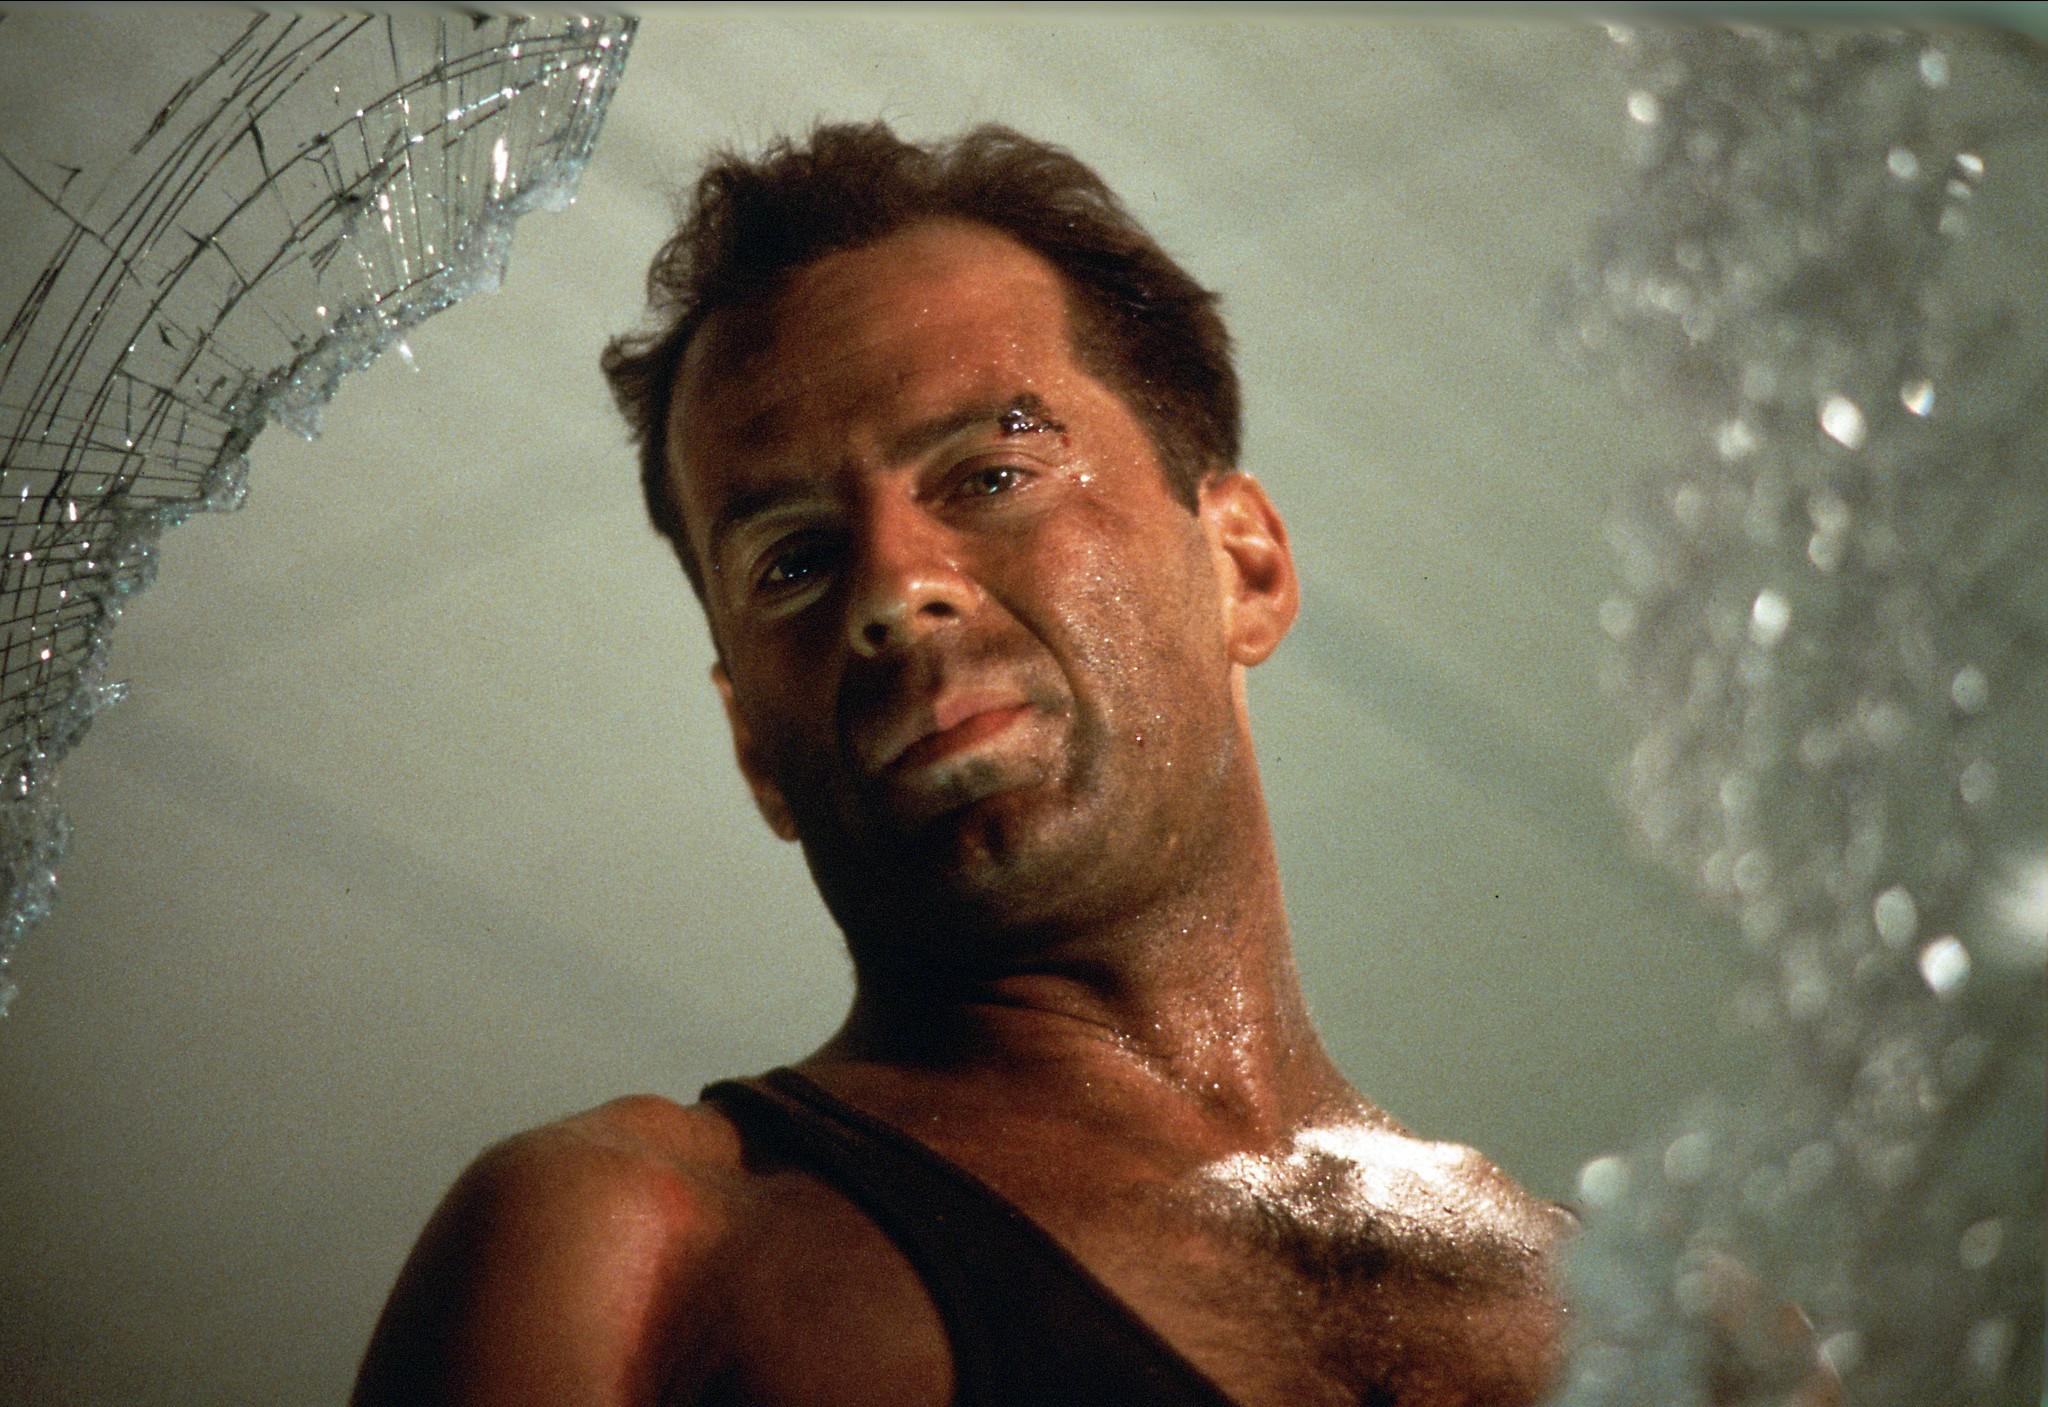 Bruce Willis in Die Hard, 1988. Image: AA Film Archive / Alamy Stock Photo